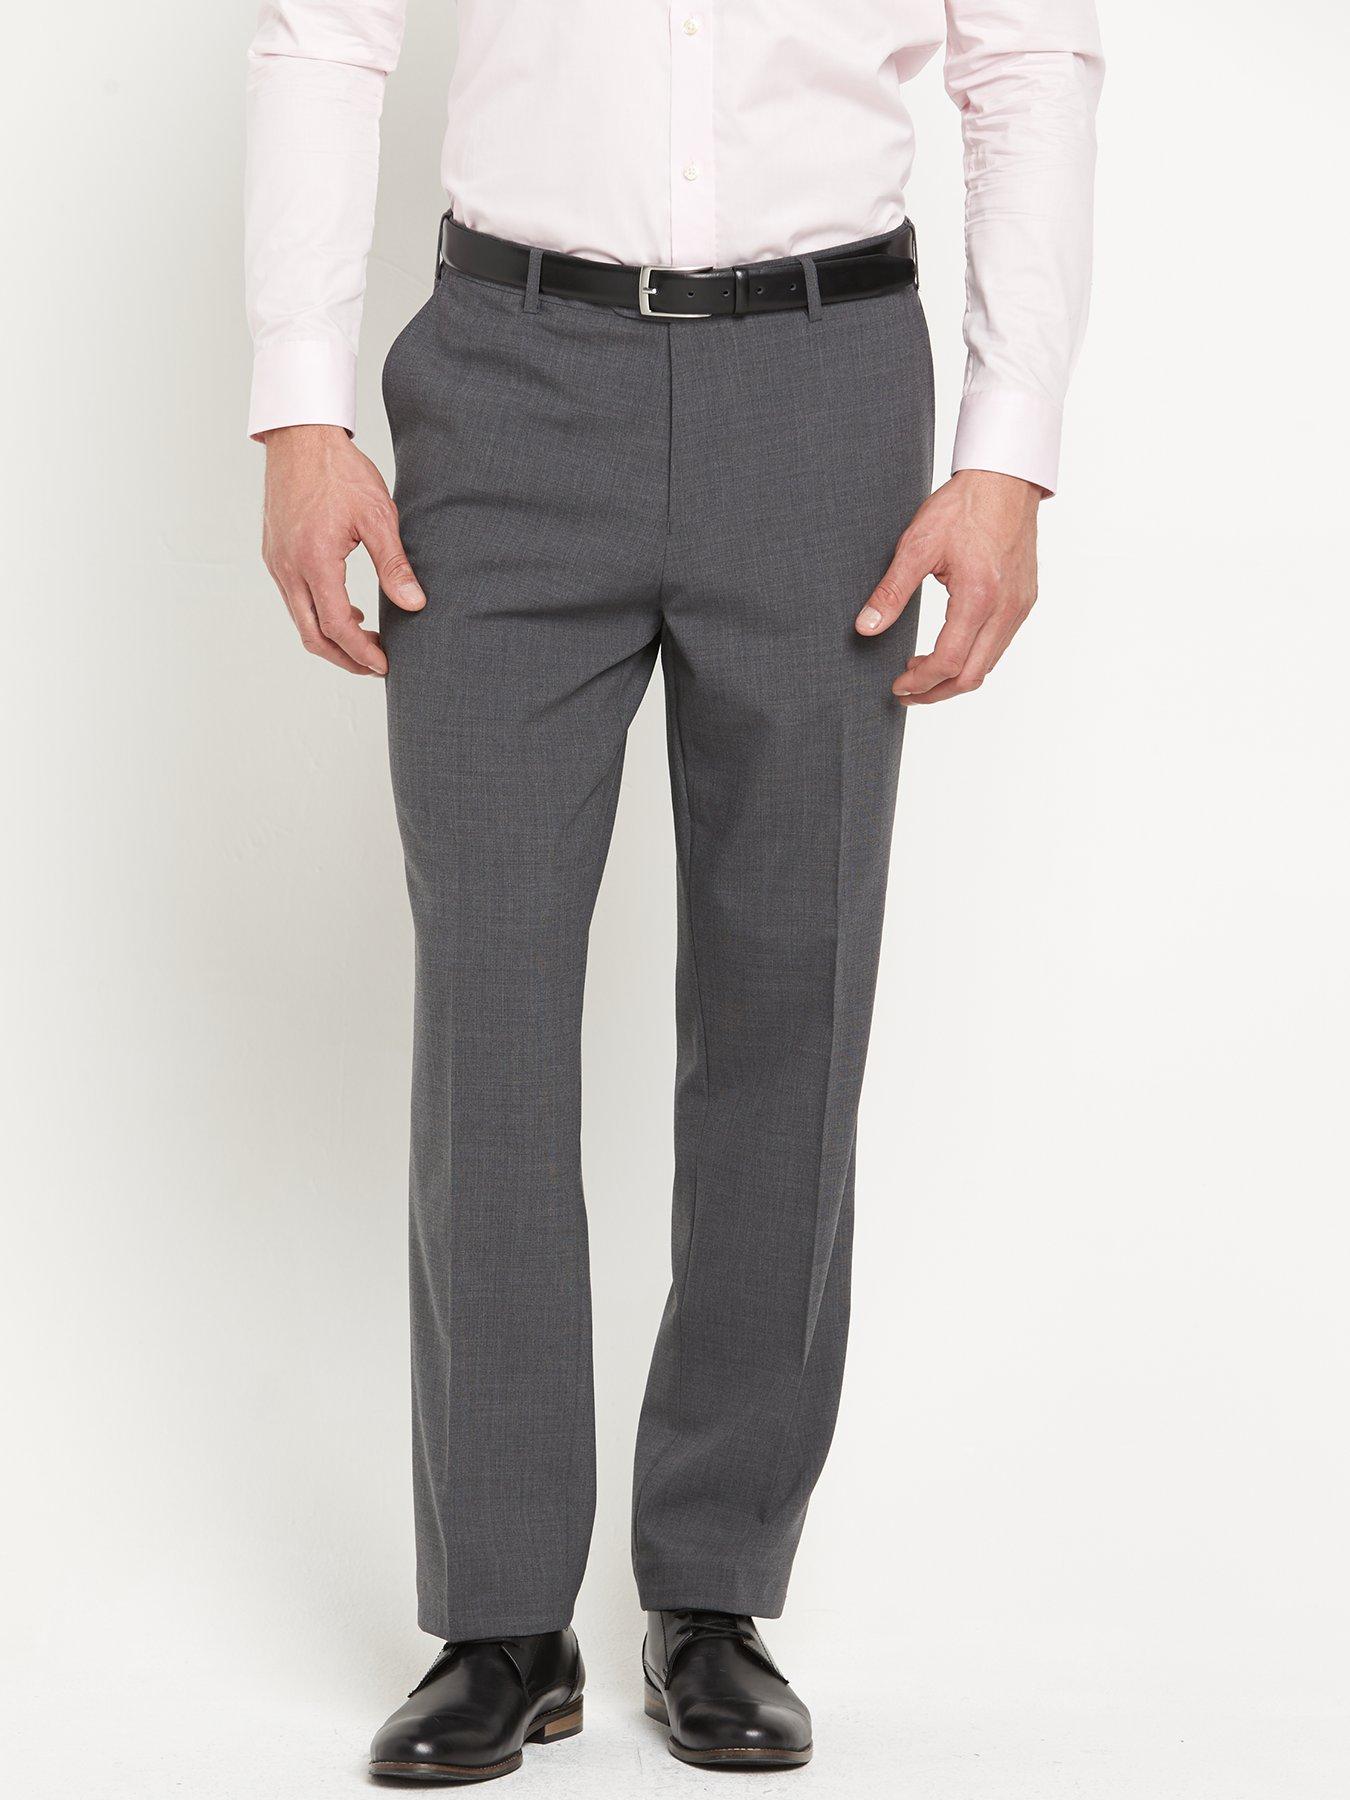 Save 34% Slacks and Chinos Versace Trousers Slacks and Chinos Mens Trousers Grey for Men Versace Mens Pants in Grey 